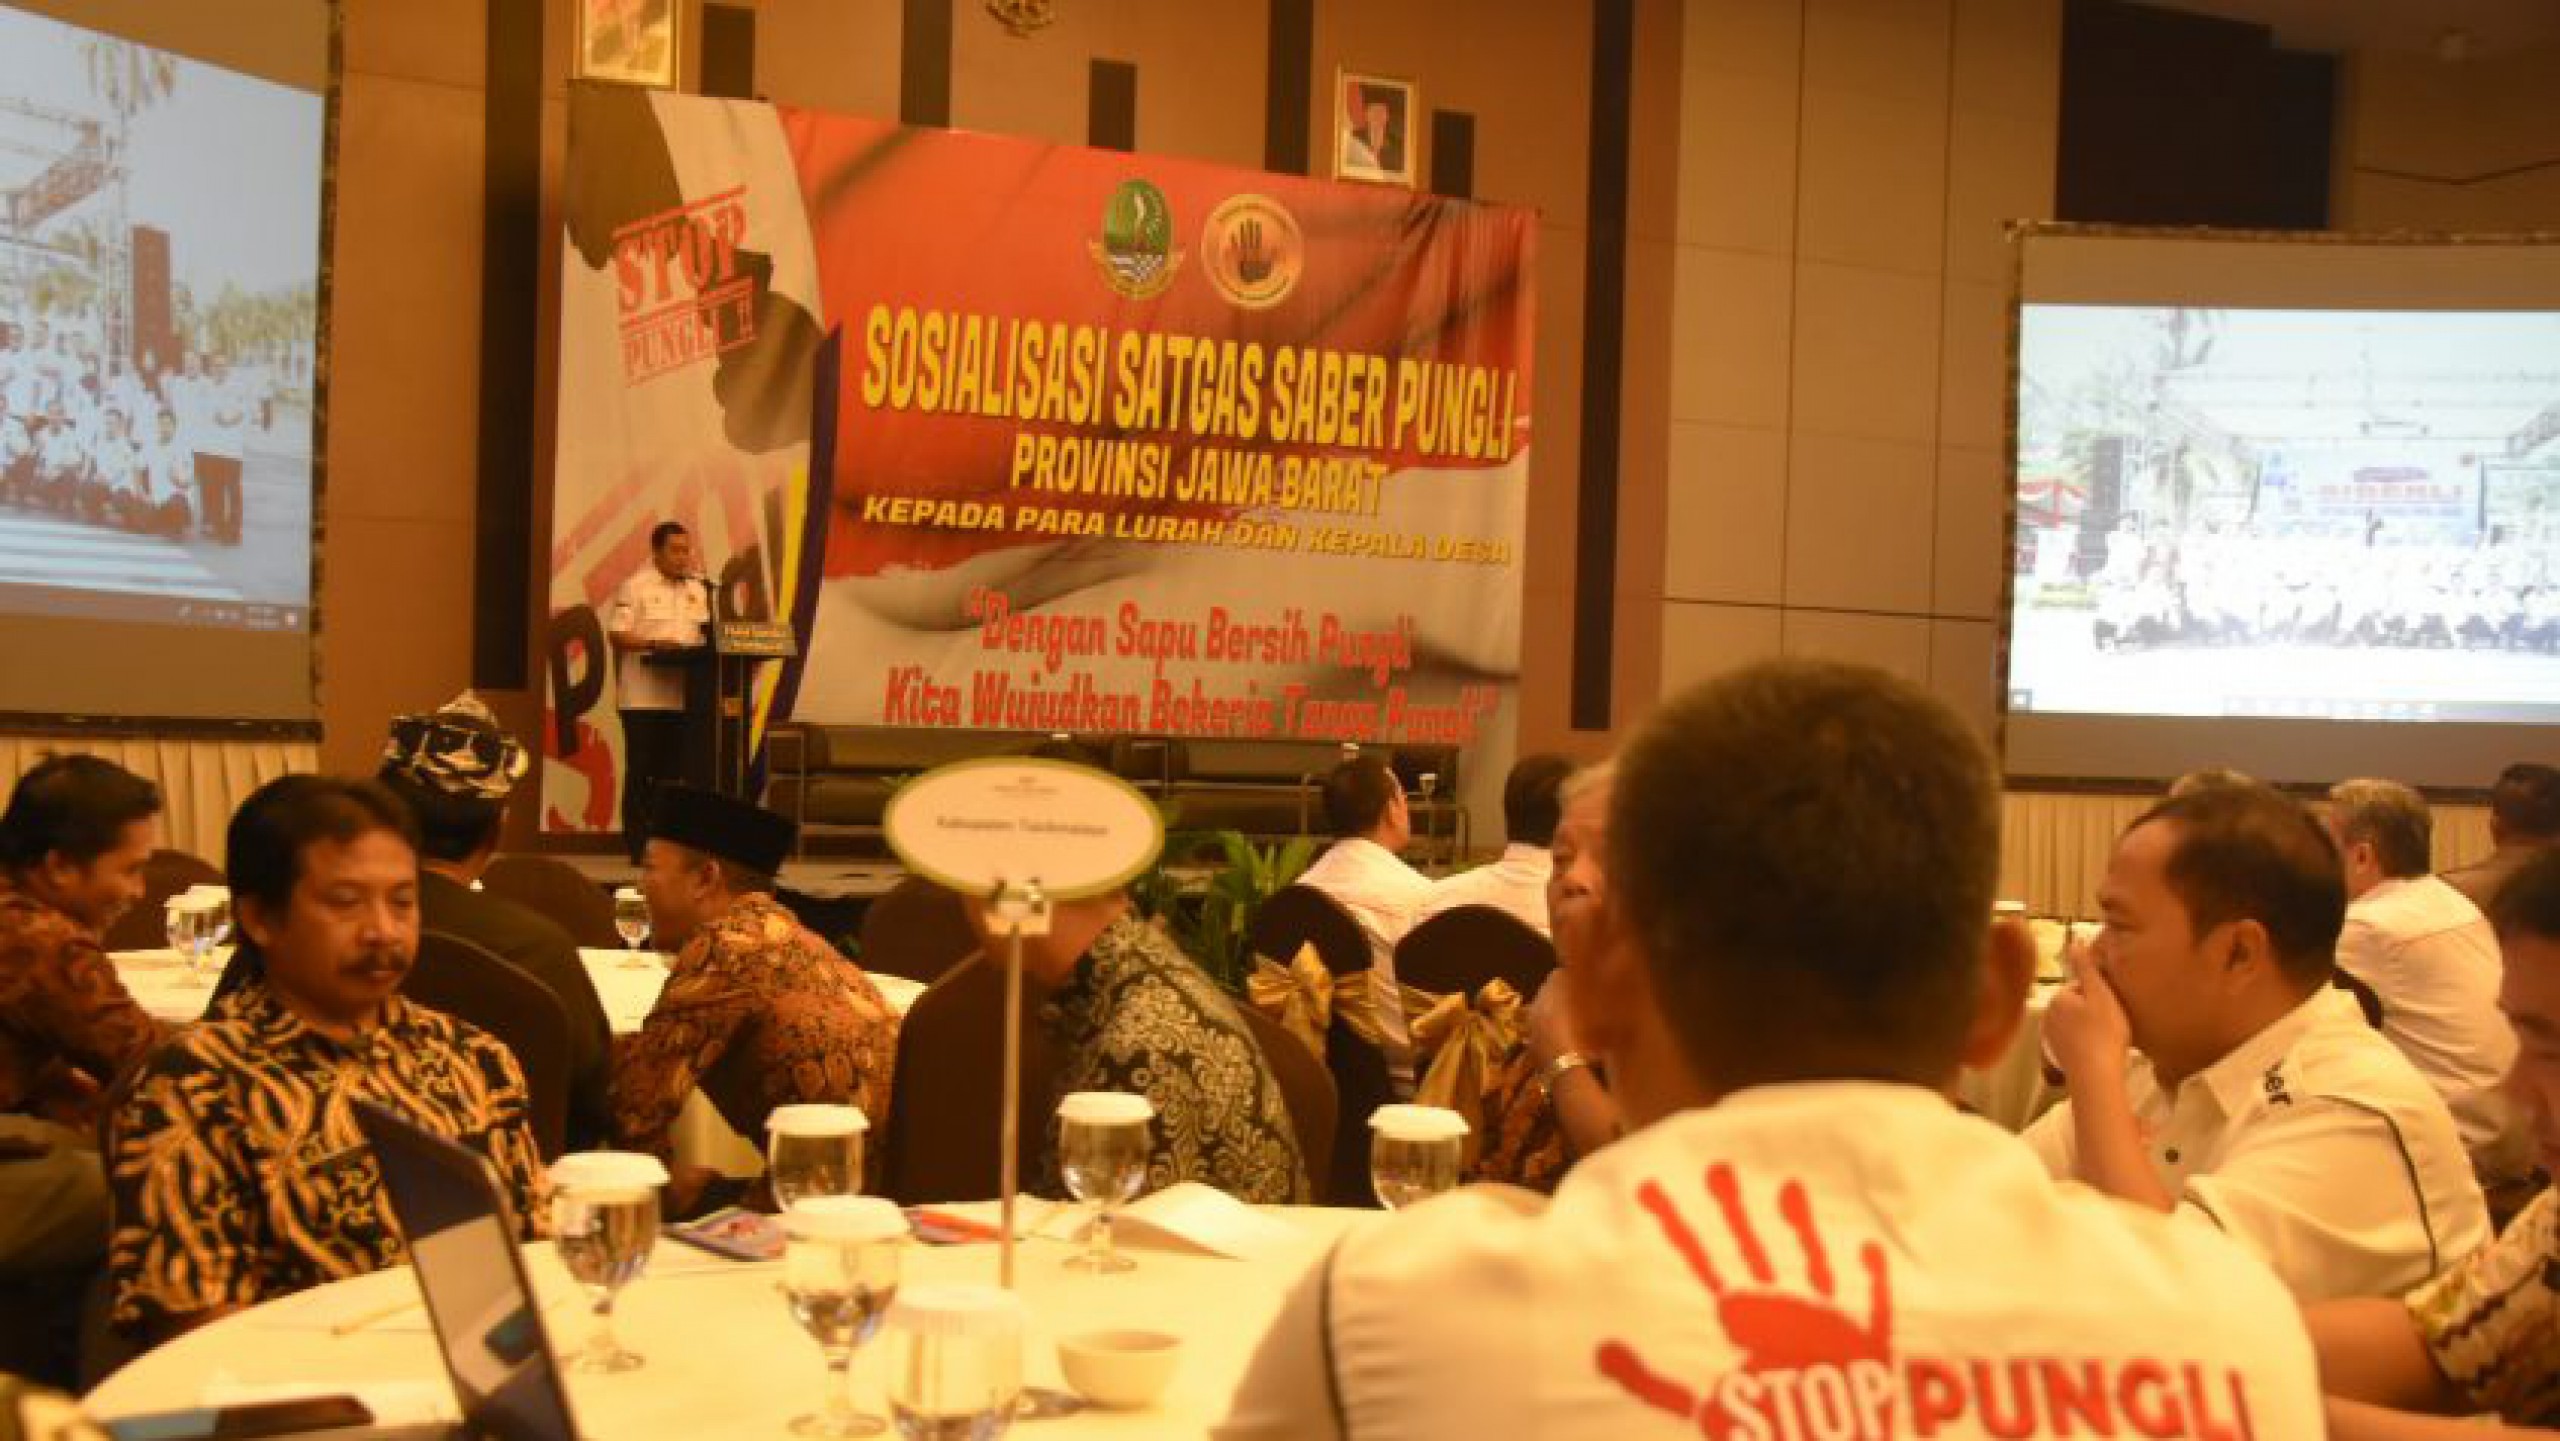 saberpungli jabar - Sosialisasi Satgas Saber Pungli Provinsi Jawa Barat Mengusung Tema Dengan Sapu Bersih Pungli Kita Wujudkan Bekerja Tanpa Pungli